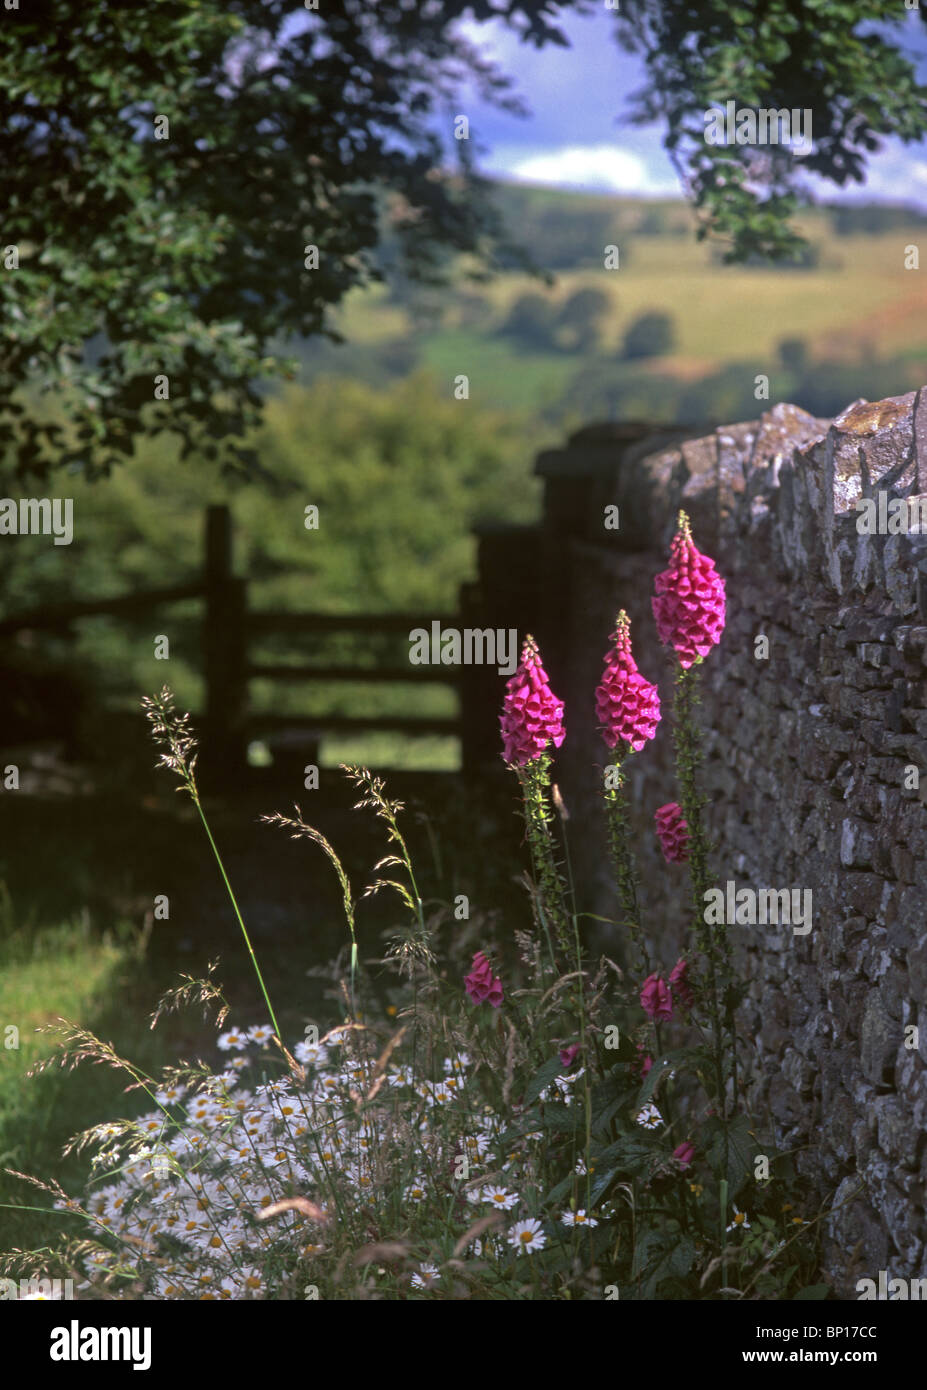 Foxgloves and stile / gate at St Illtyd's churchyard, Brynithel, near Llanhilleth, Blaenau Gwent, Valleys, South Wales, UK Stock Photo